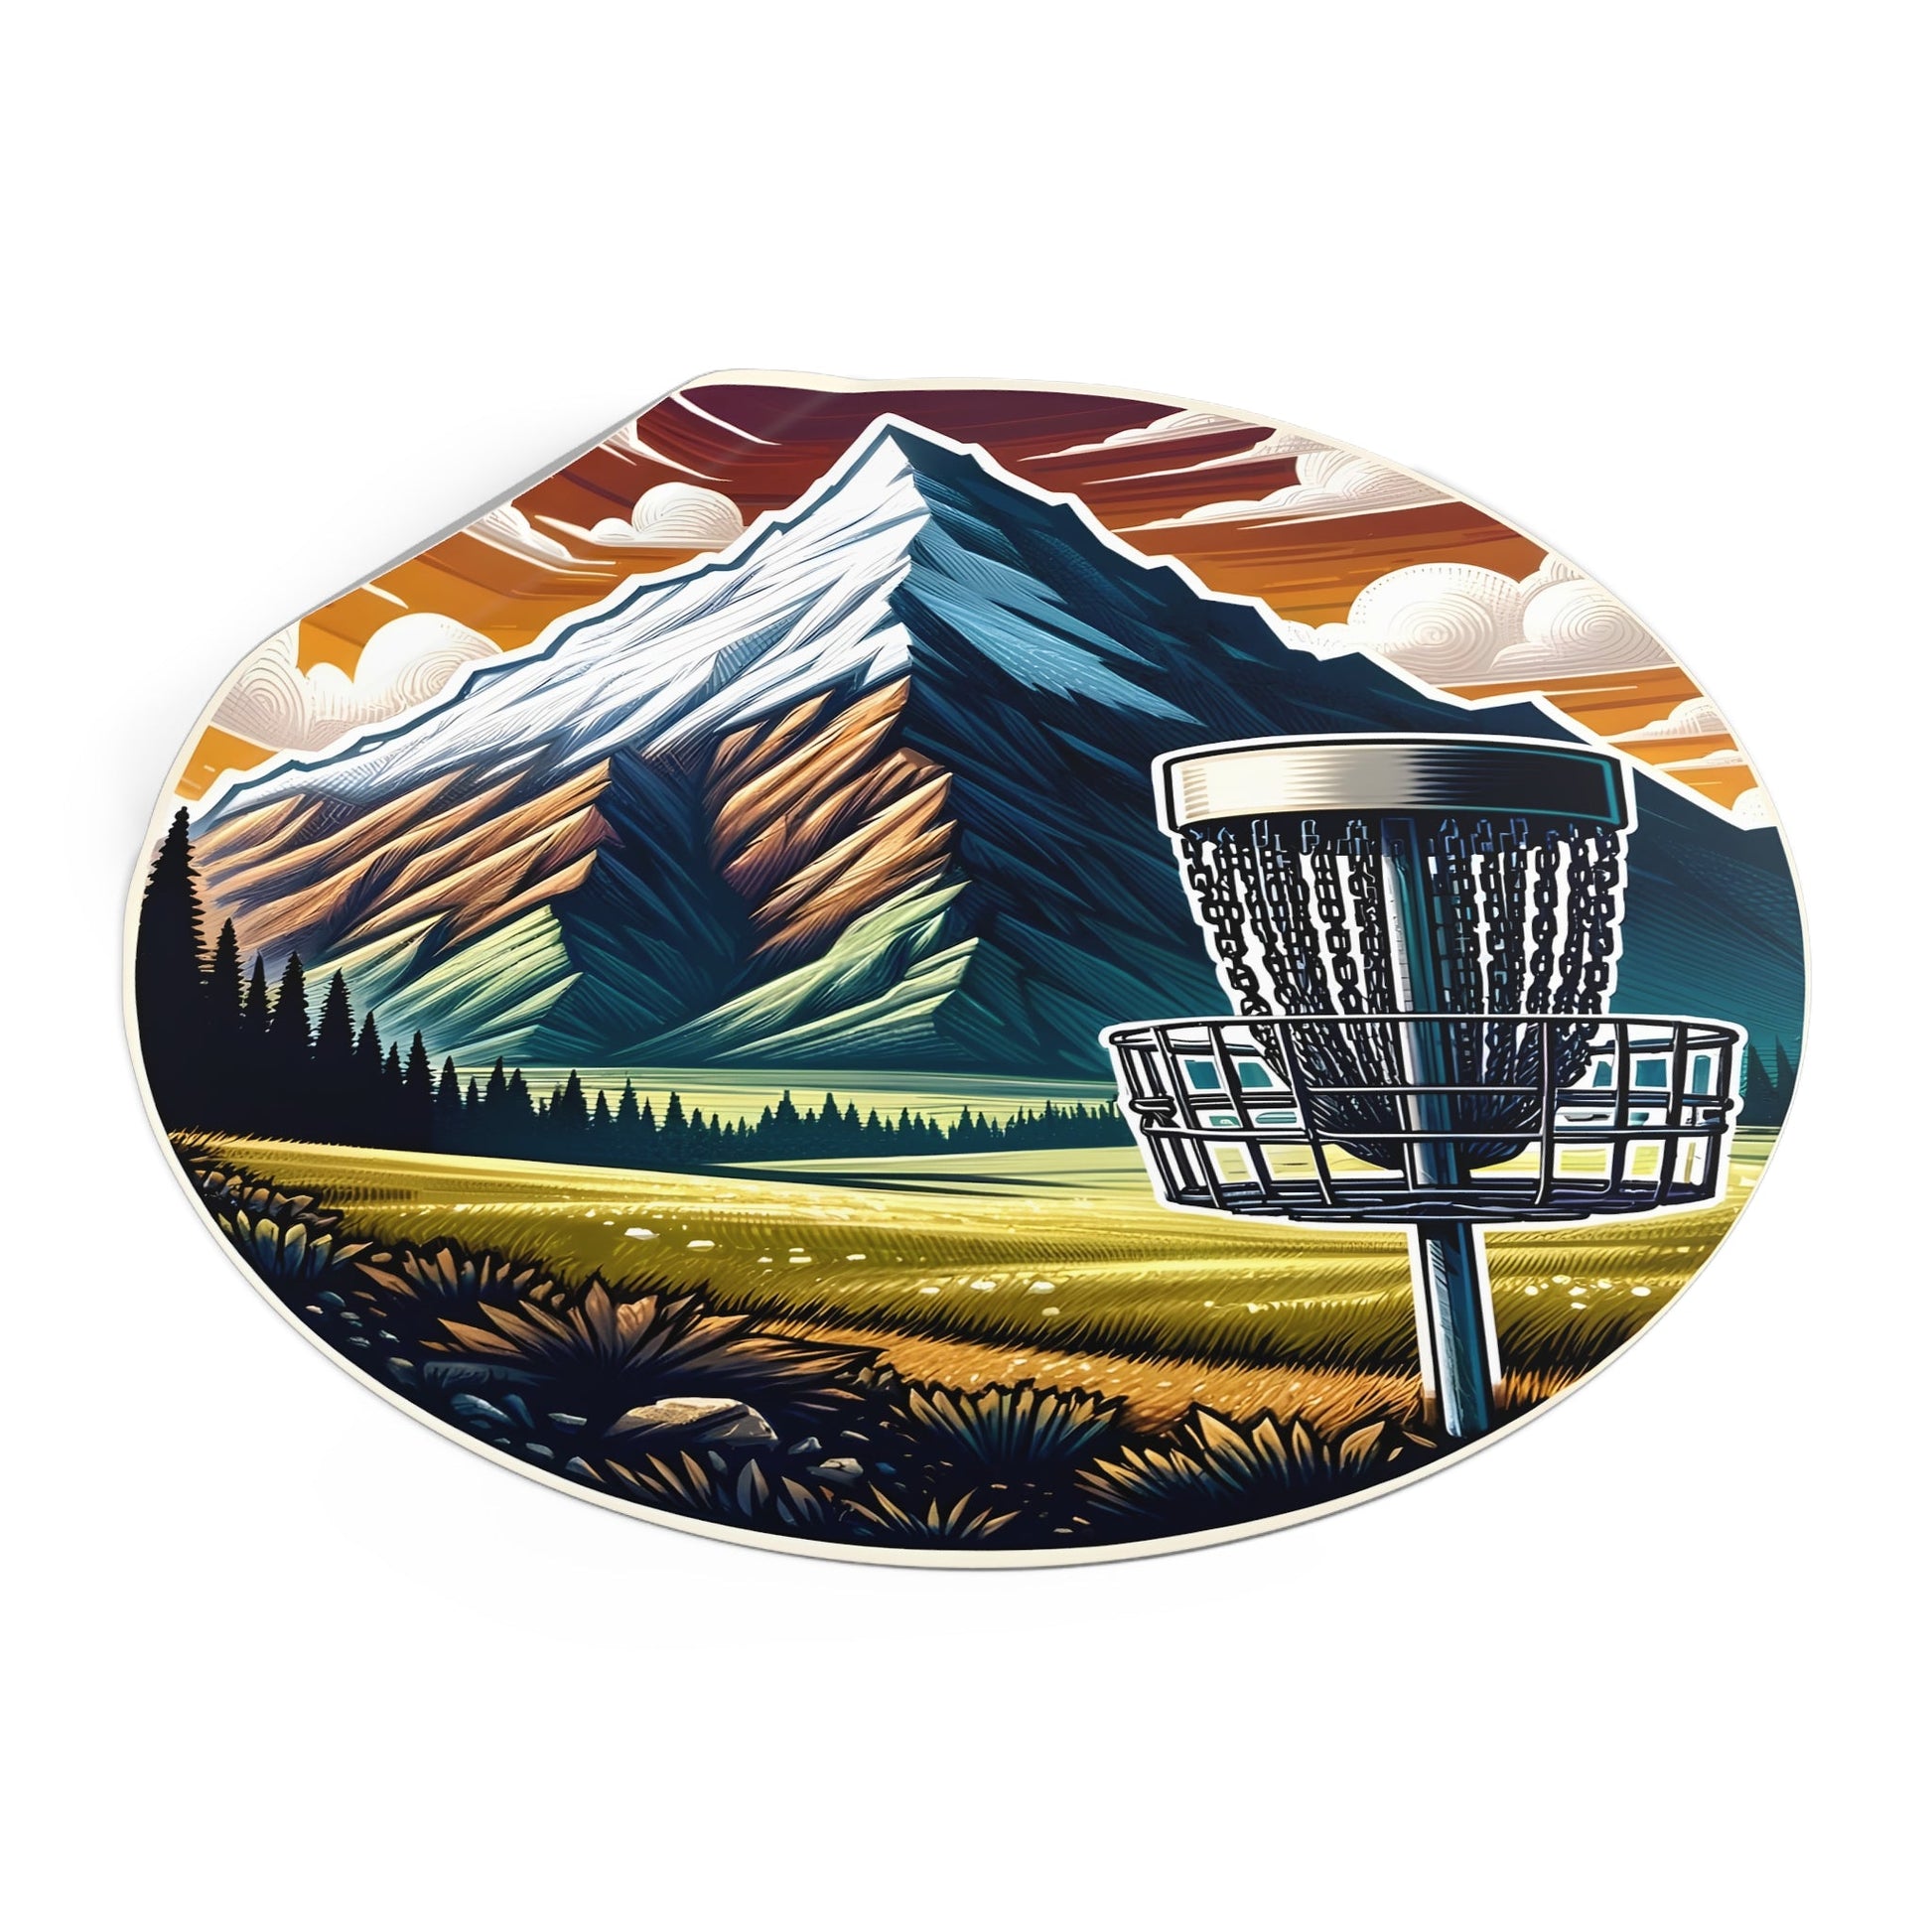 Disc Golf Basket by Mountain Sticker v1 Round Vinyl Stickers - Quirky Goodies